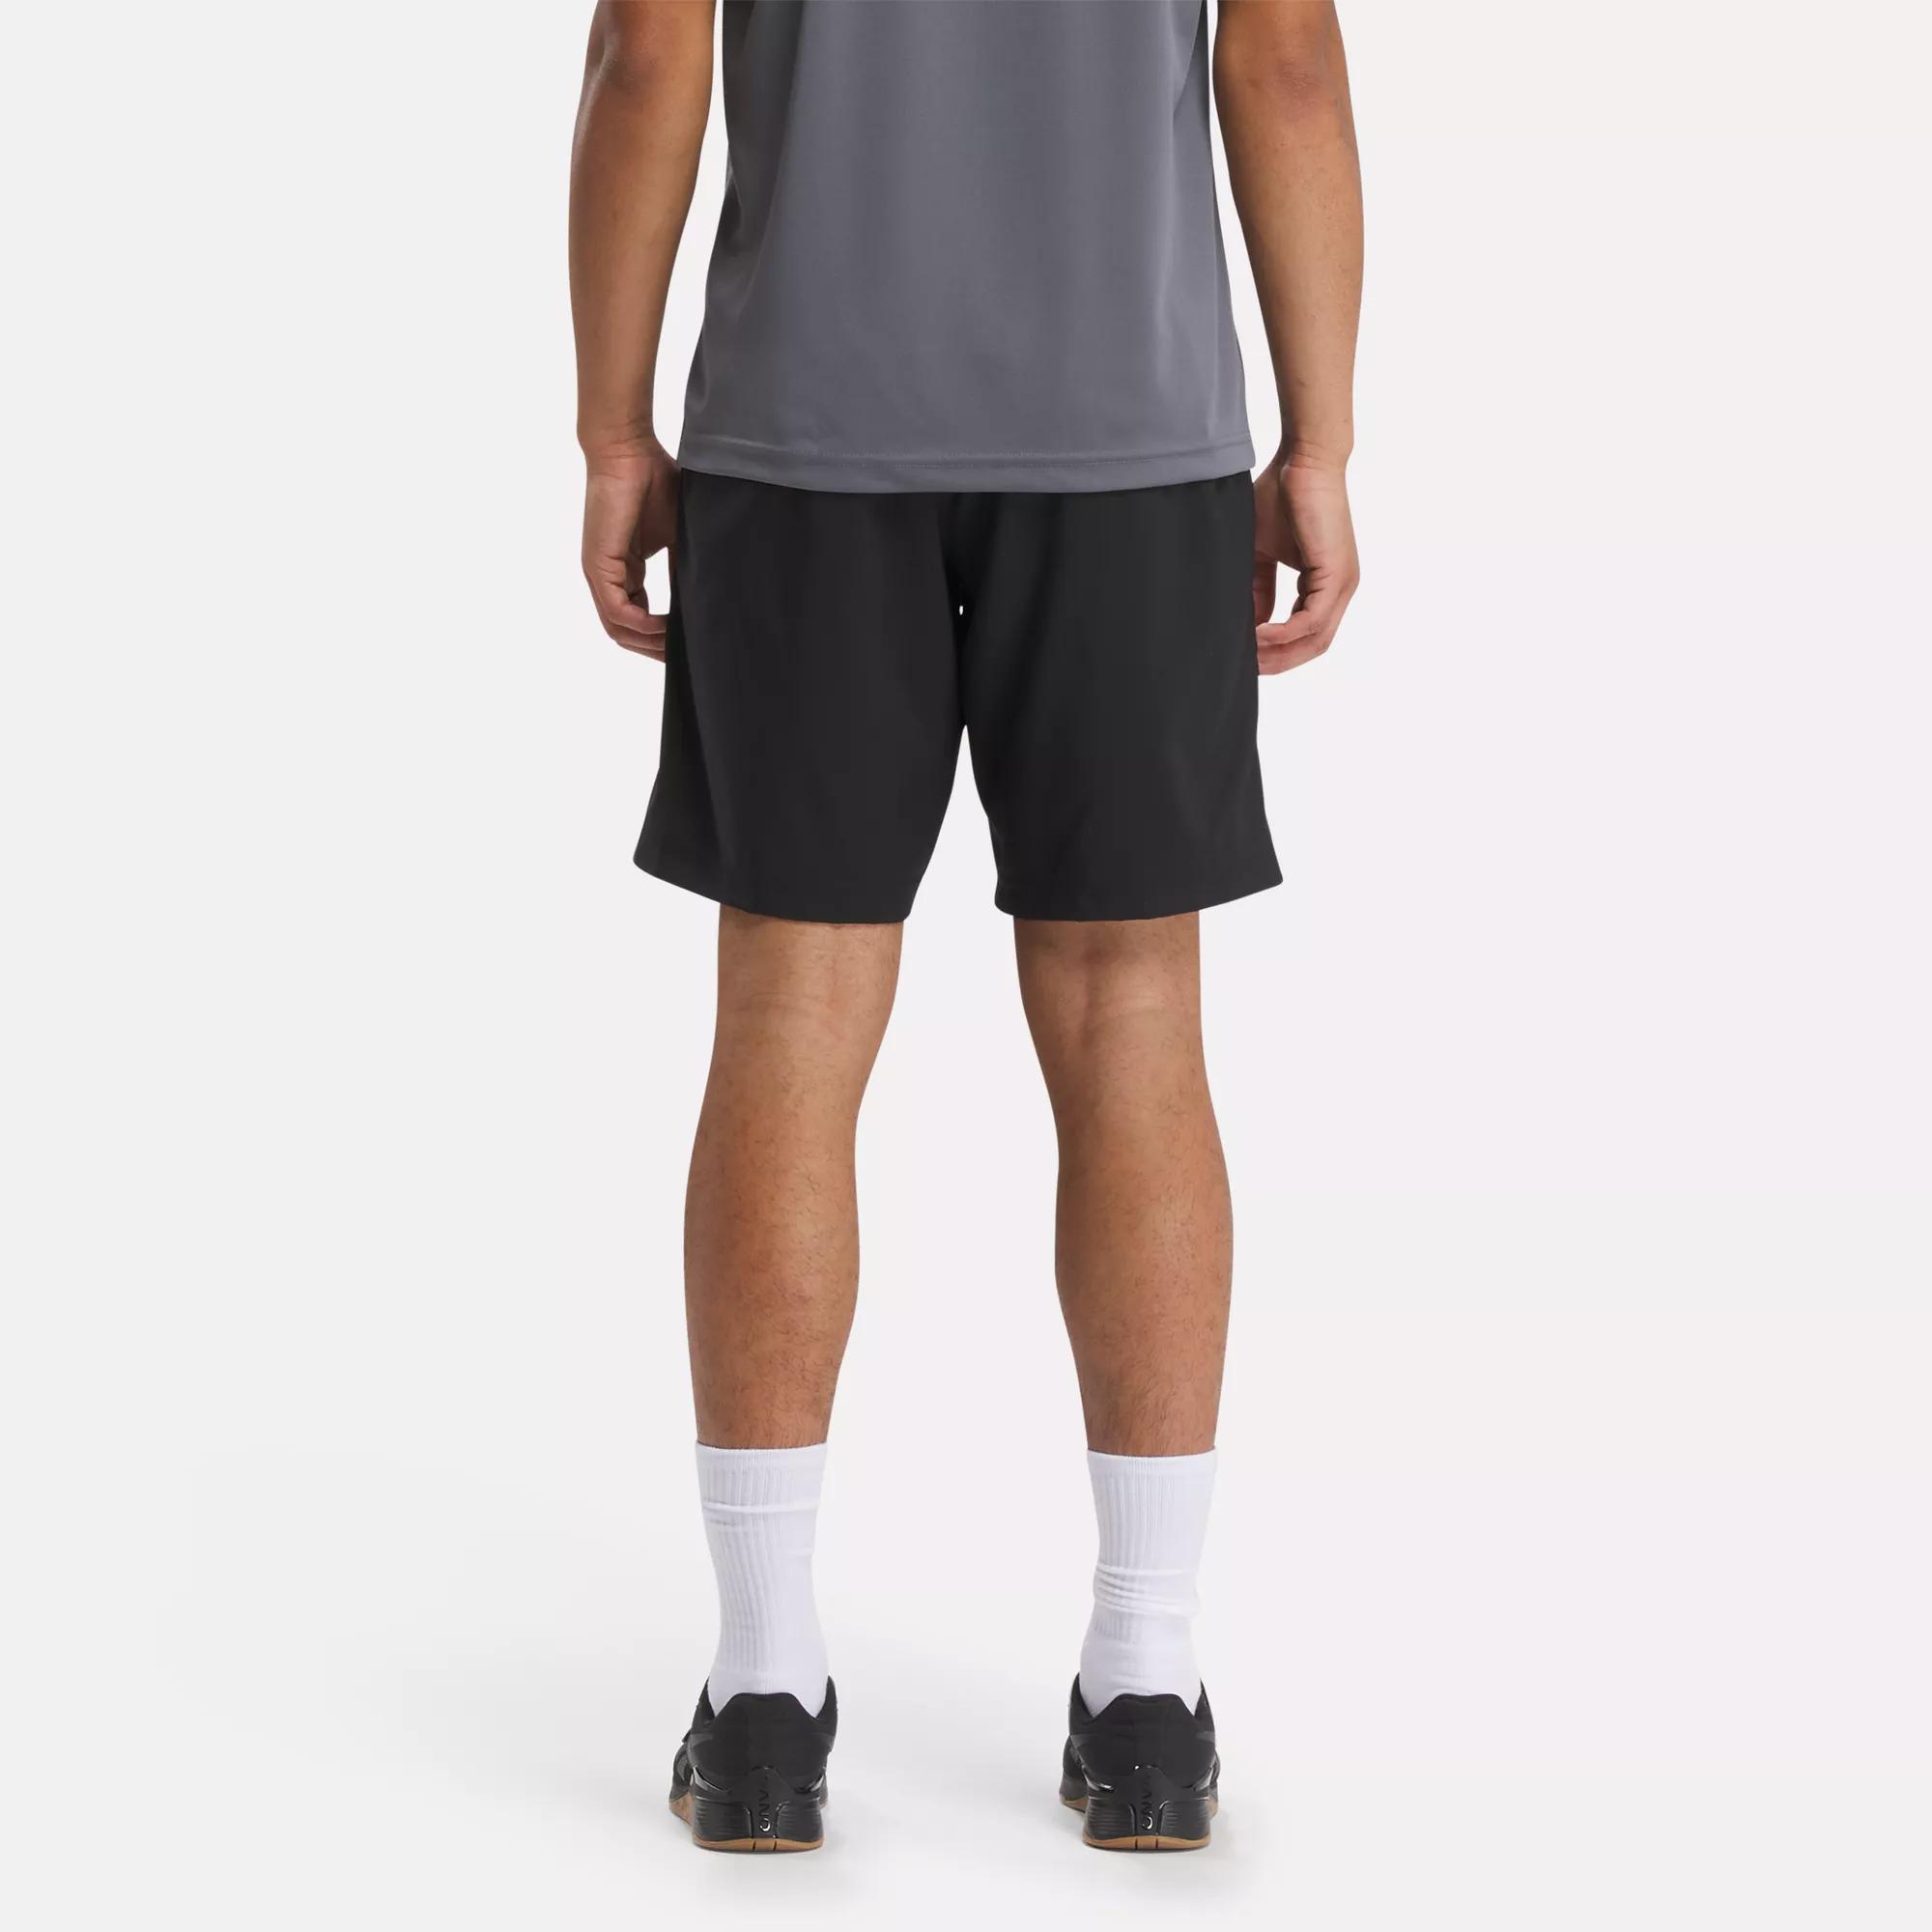 Reebok Play Dry Athletic Shorts Mens Size Medium Movement Zone Black Pull On